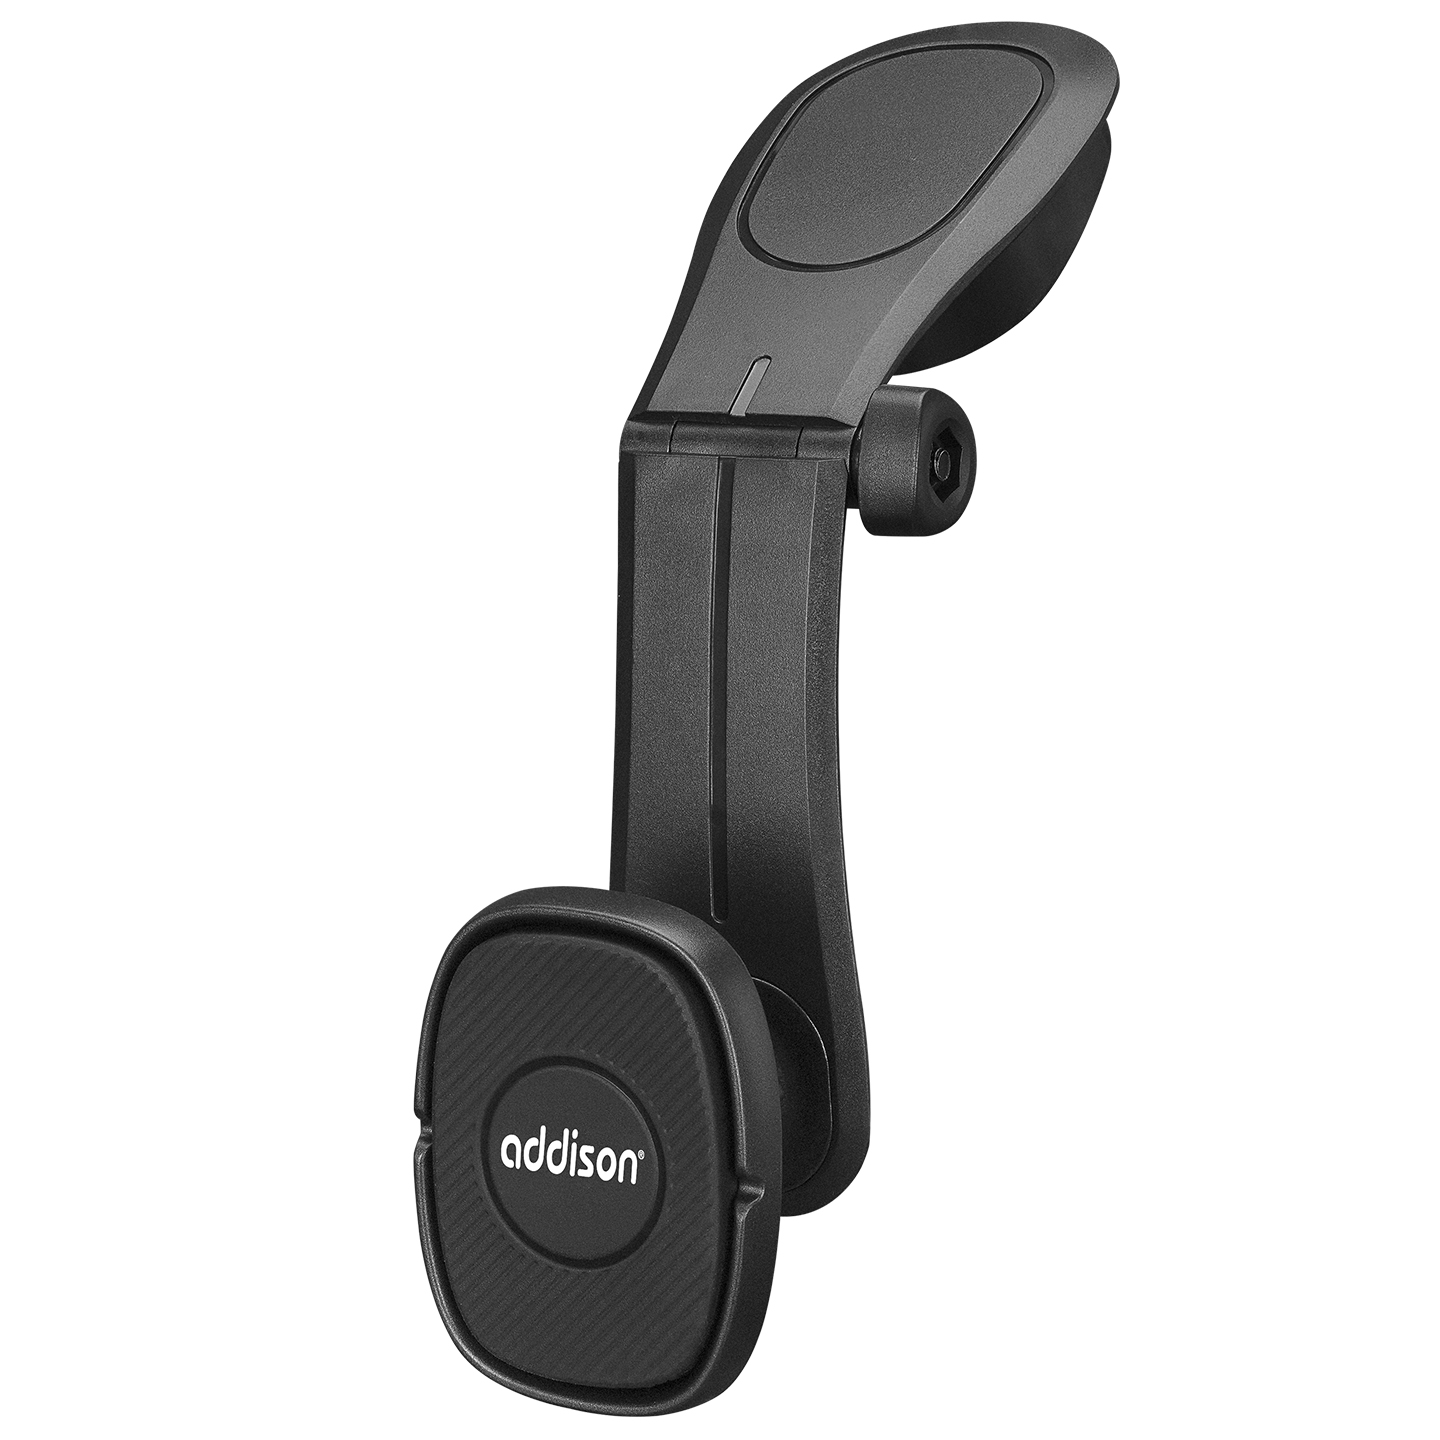 Addison ADS-142 Universal Ayarlanabilir Siyah Torpido Üstü Jel Pad Mıknatıslı telefon tutucu